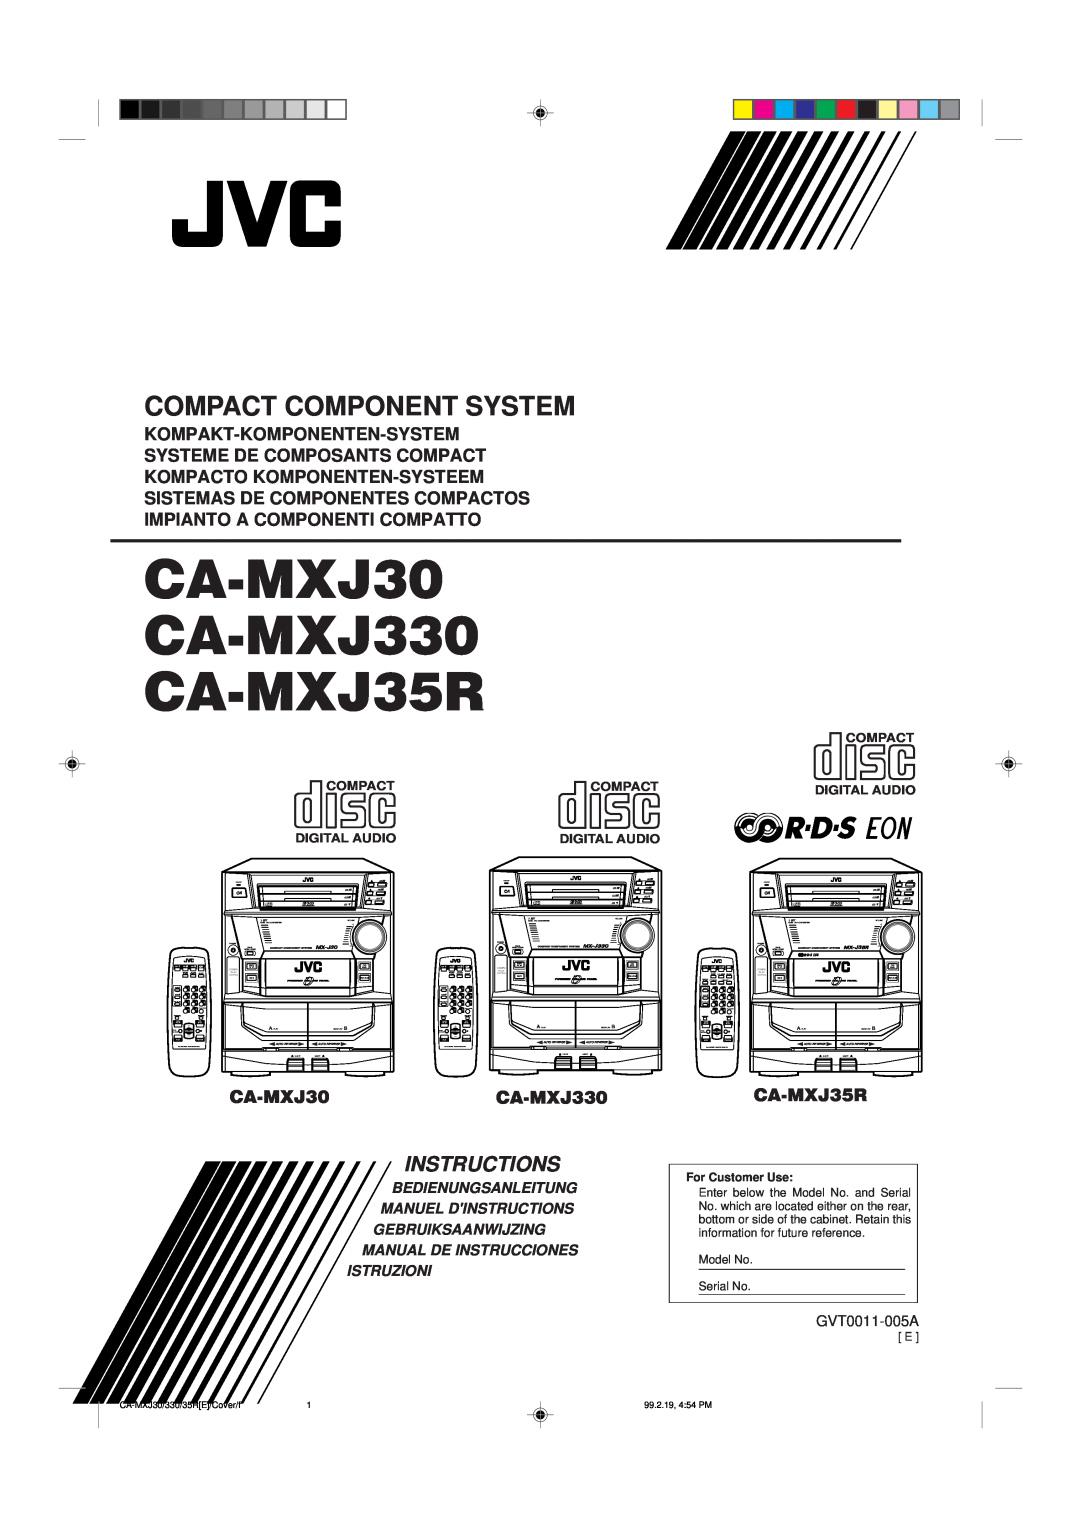 JVC CA-MXJ330 manual Kompakt-Komponenten-System Systeme De Composants Compact, Impianto A Componenti Compatto, CA-MXJ30 